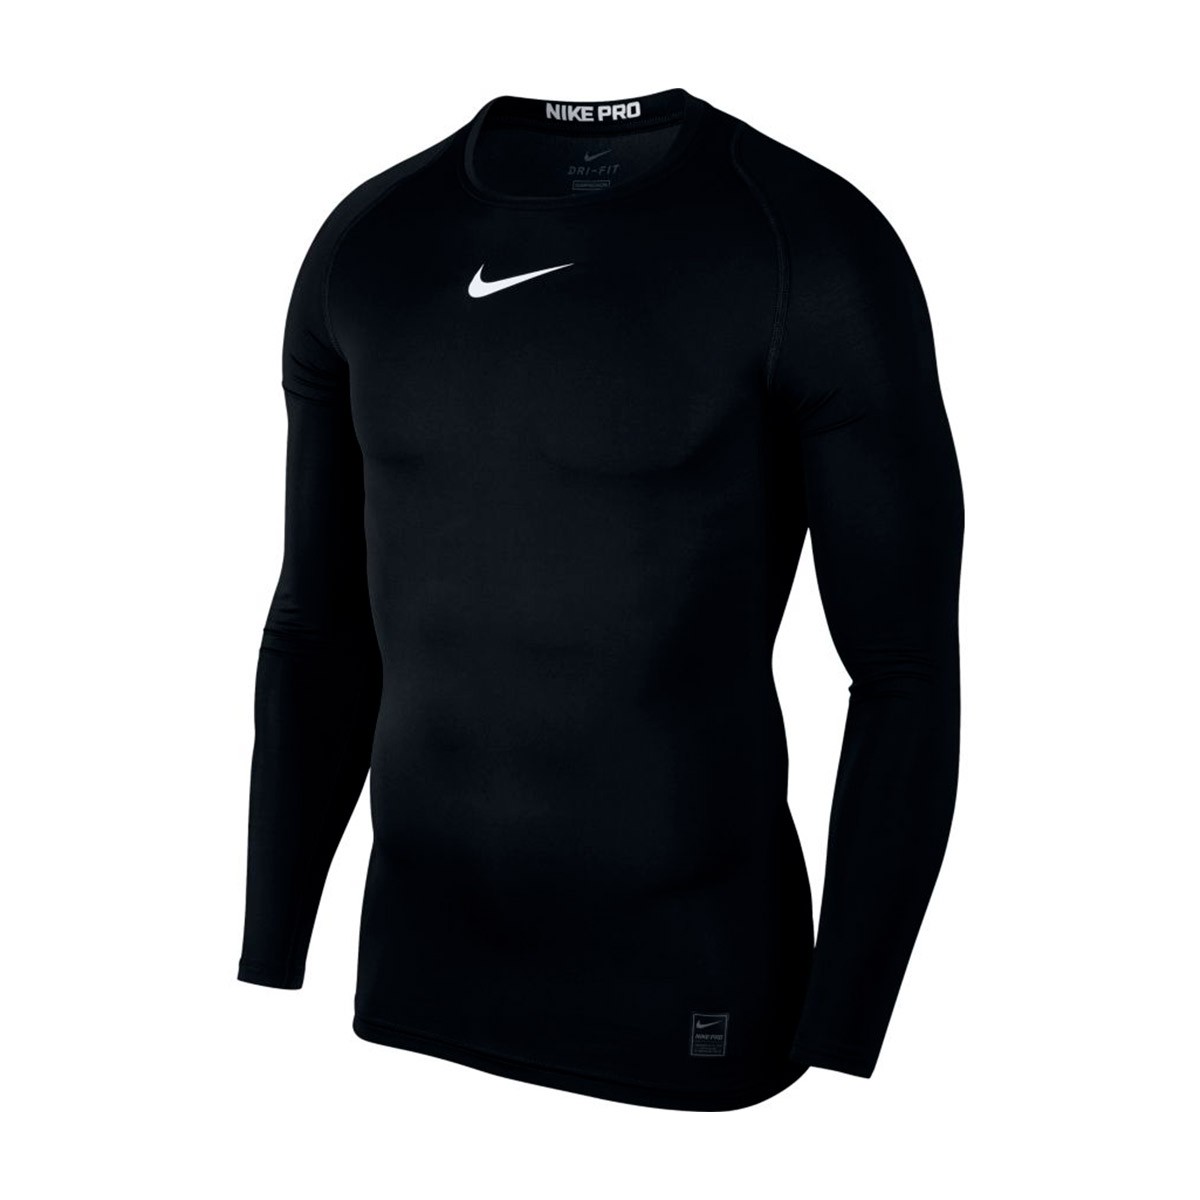 Camiseta Nike Pro Top Black-White - Tienda de fútbol Fútbol Emotion